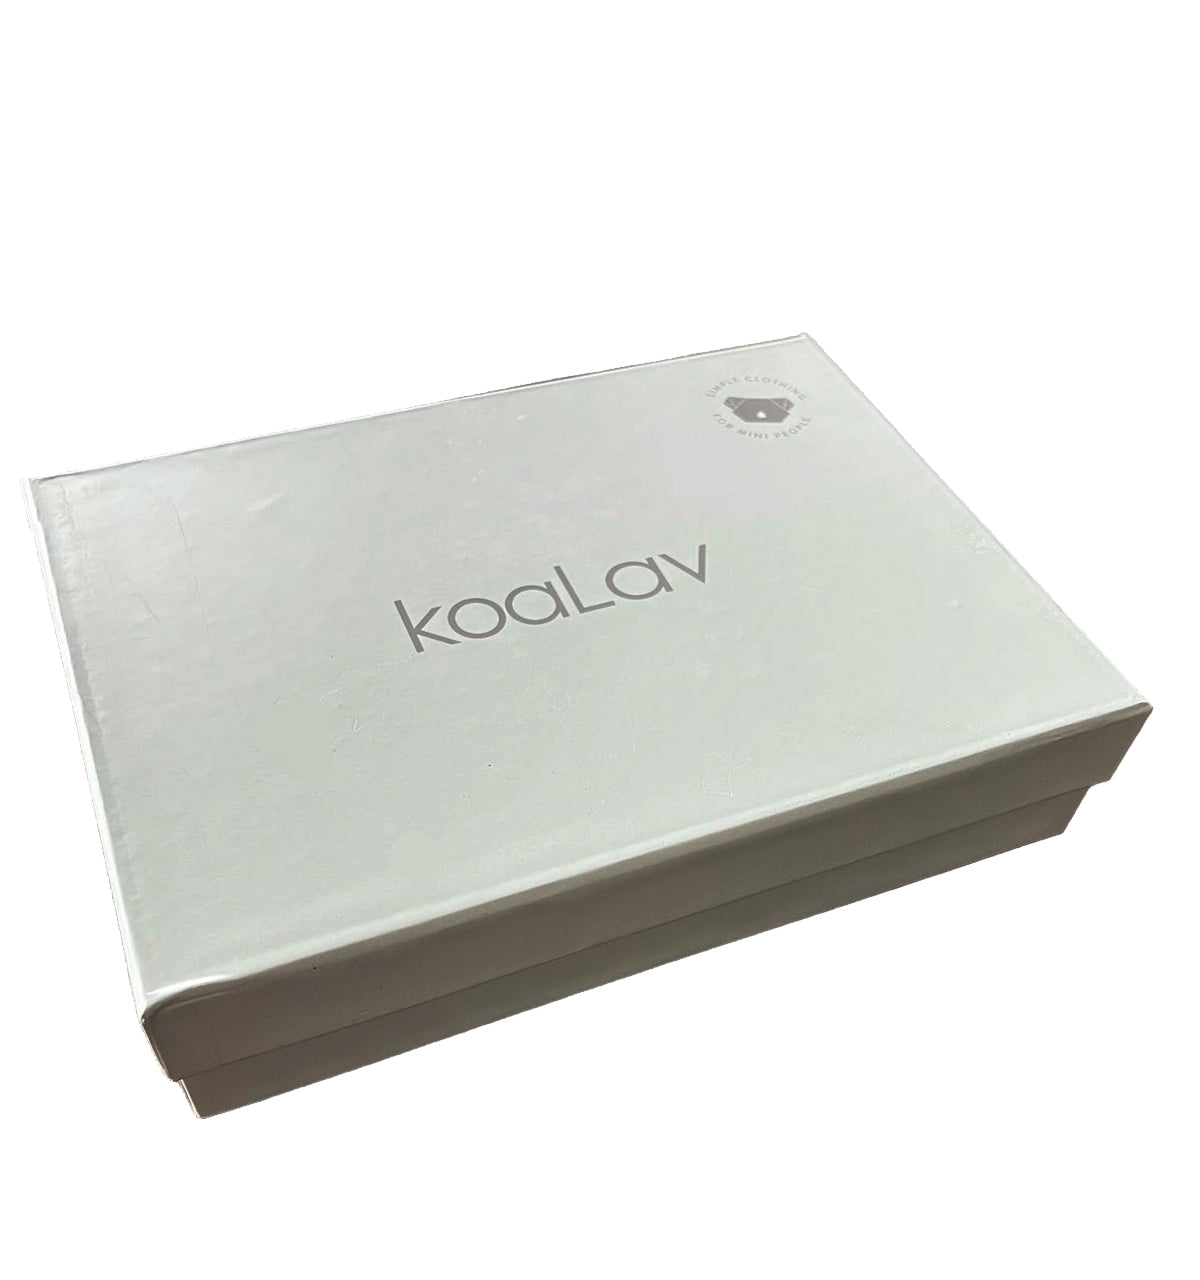 Koalav - Organic Newborn Home Coming Set in a Box | Bush | 6pcs